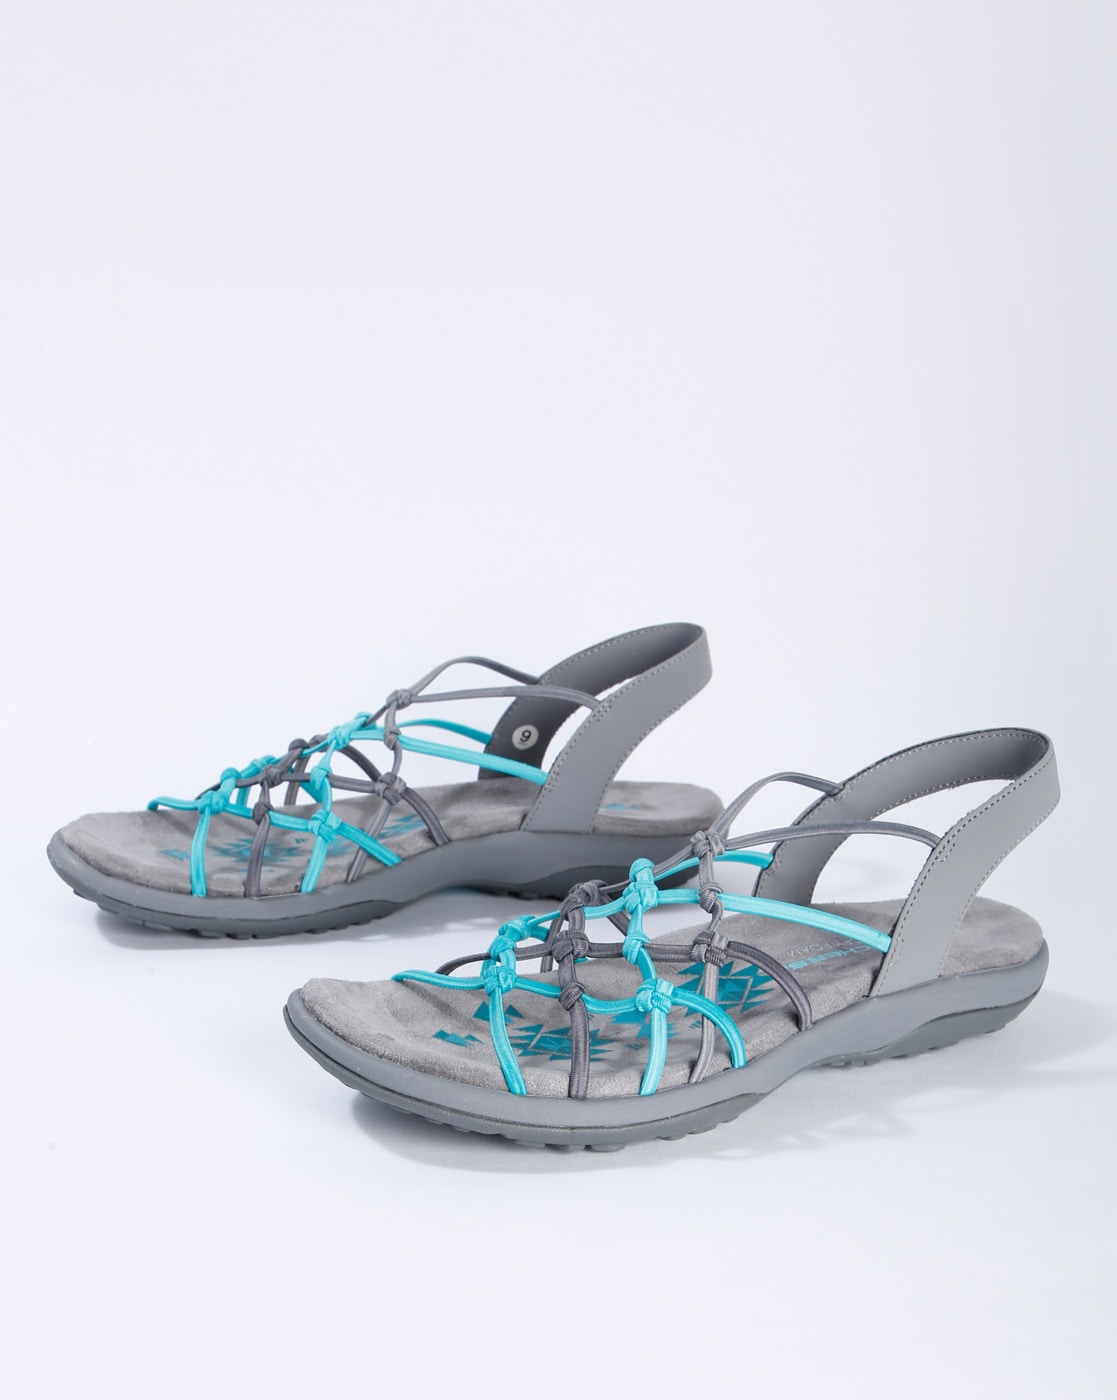 Grey Flat Sandals for Women by Skechers 